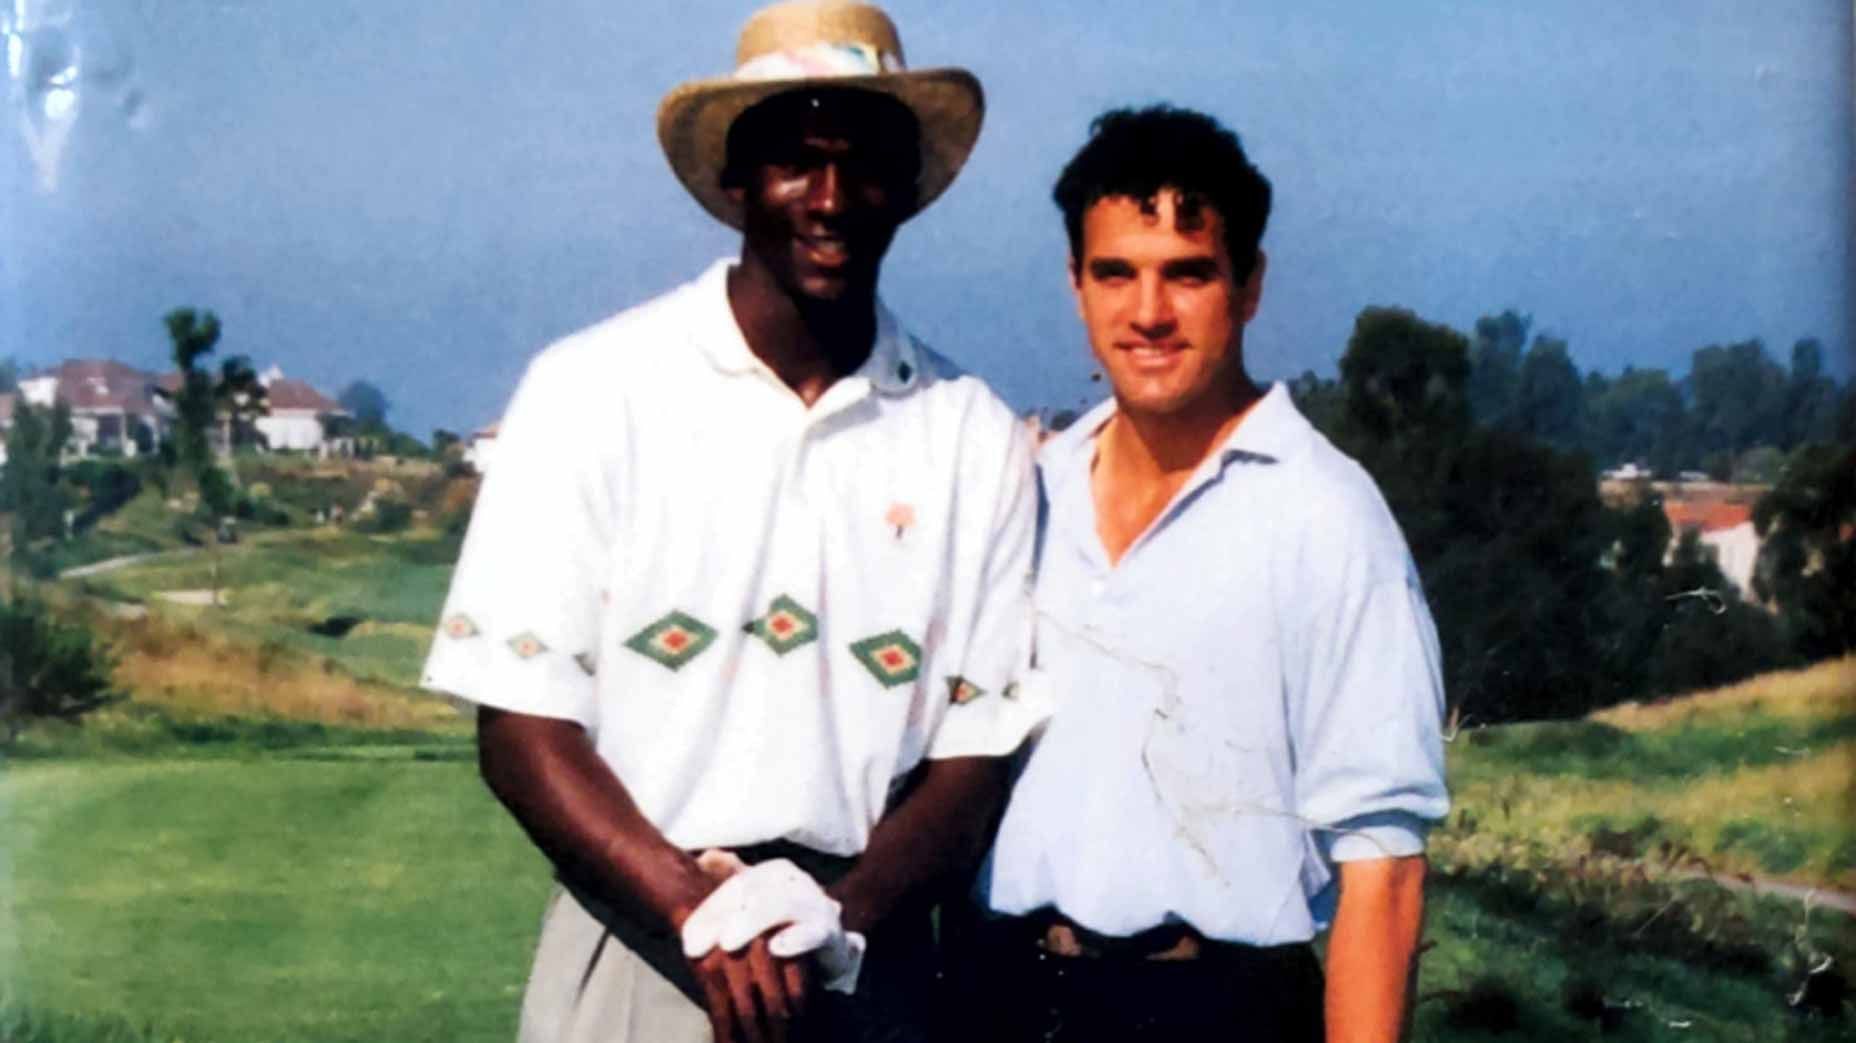 Chicago Bulls legend Michael Jordan (left) and businessman Richard Esquinas